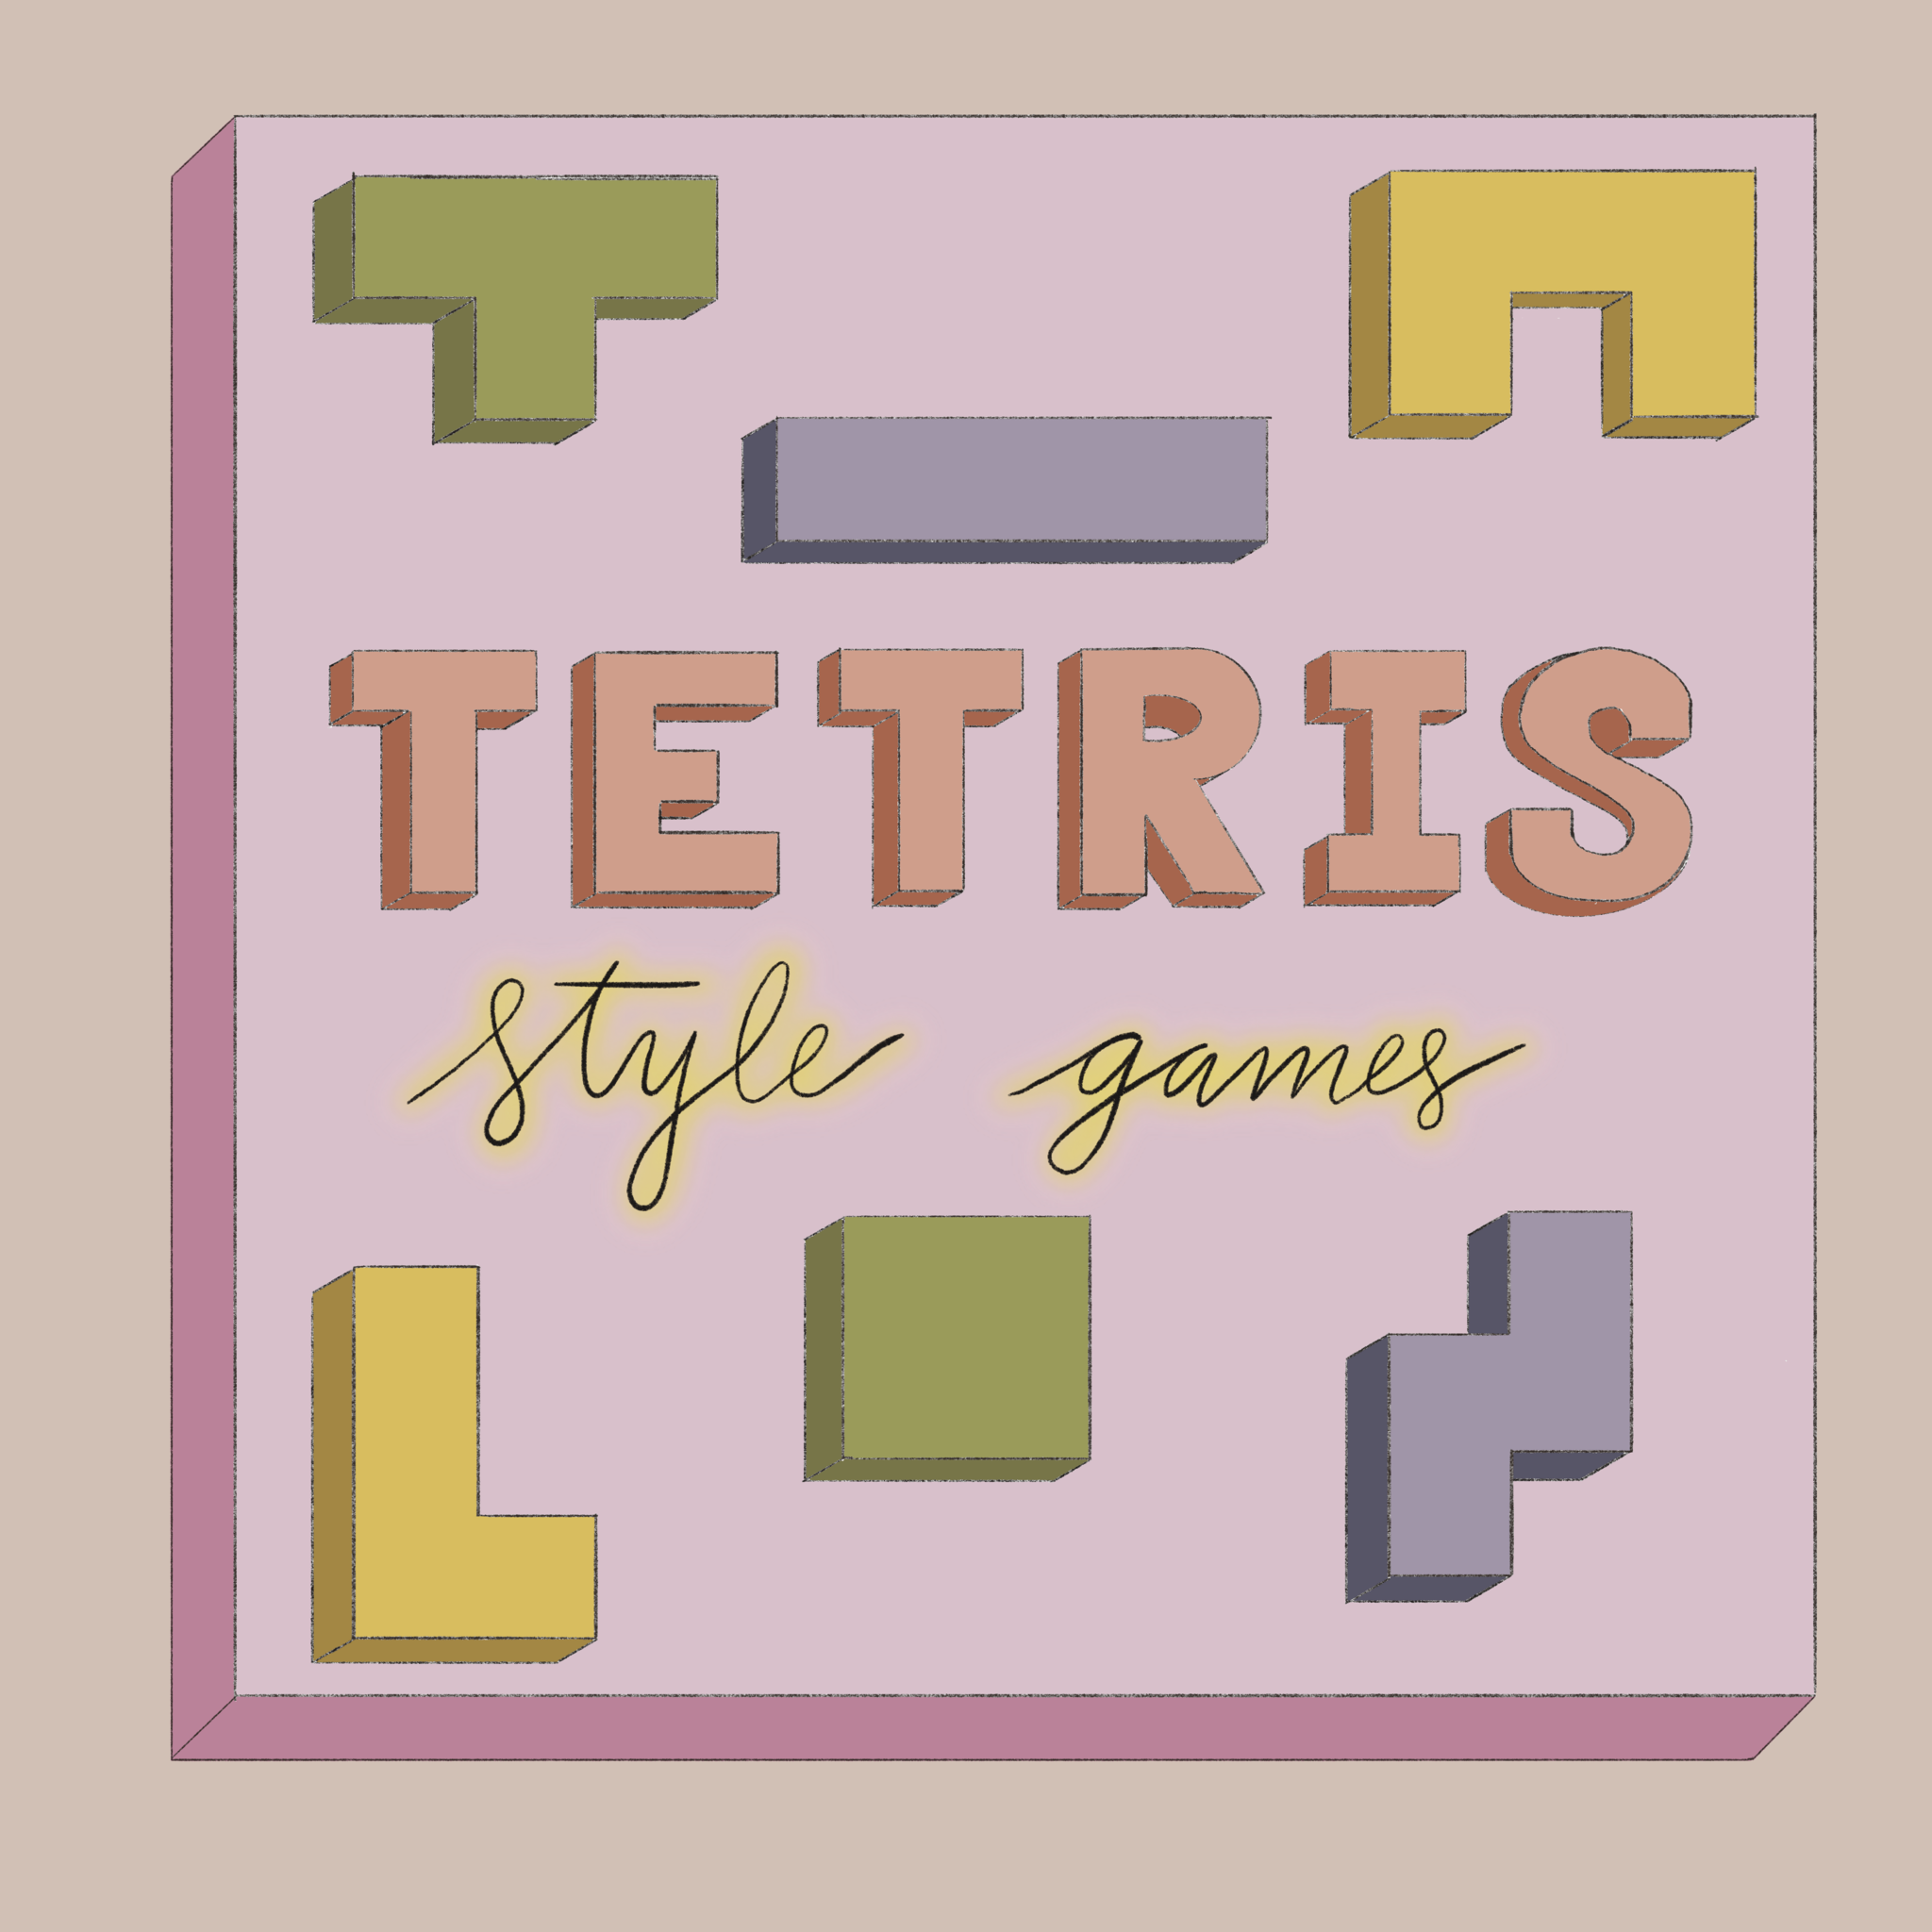 Satisfying Tetris Style Board Games